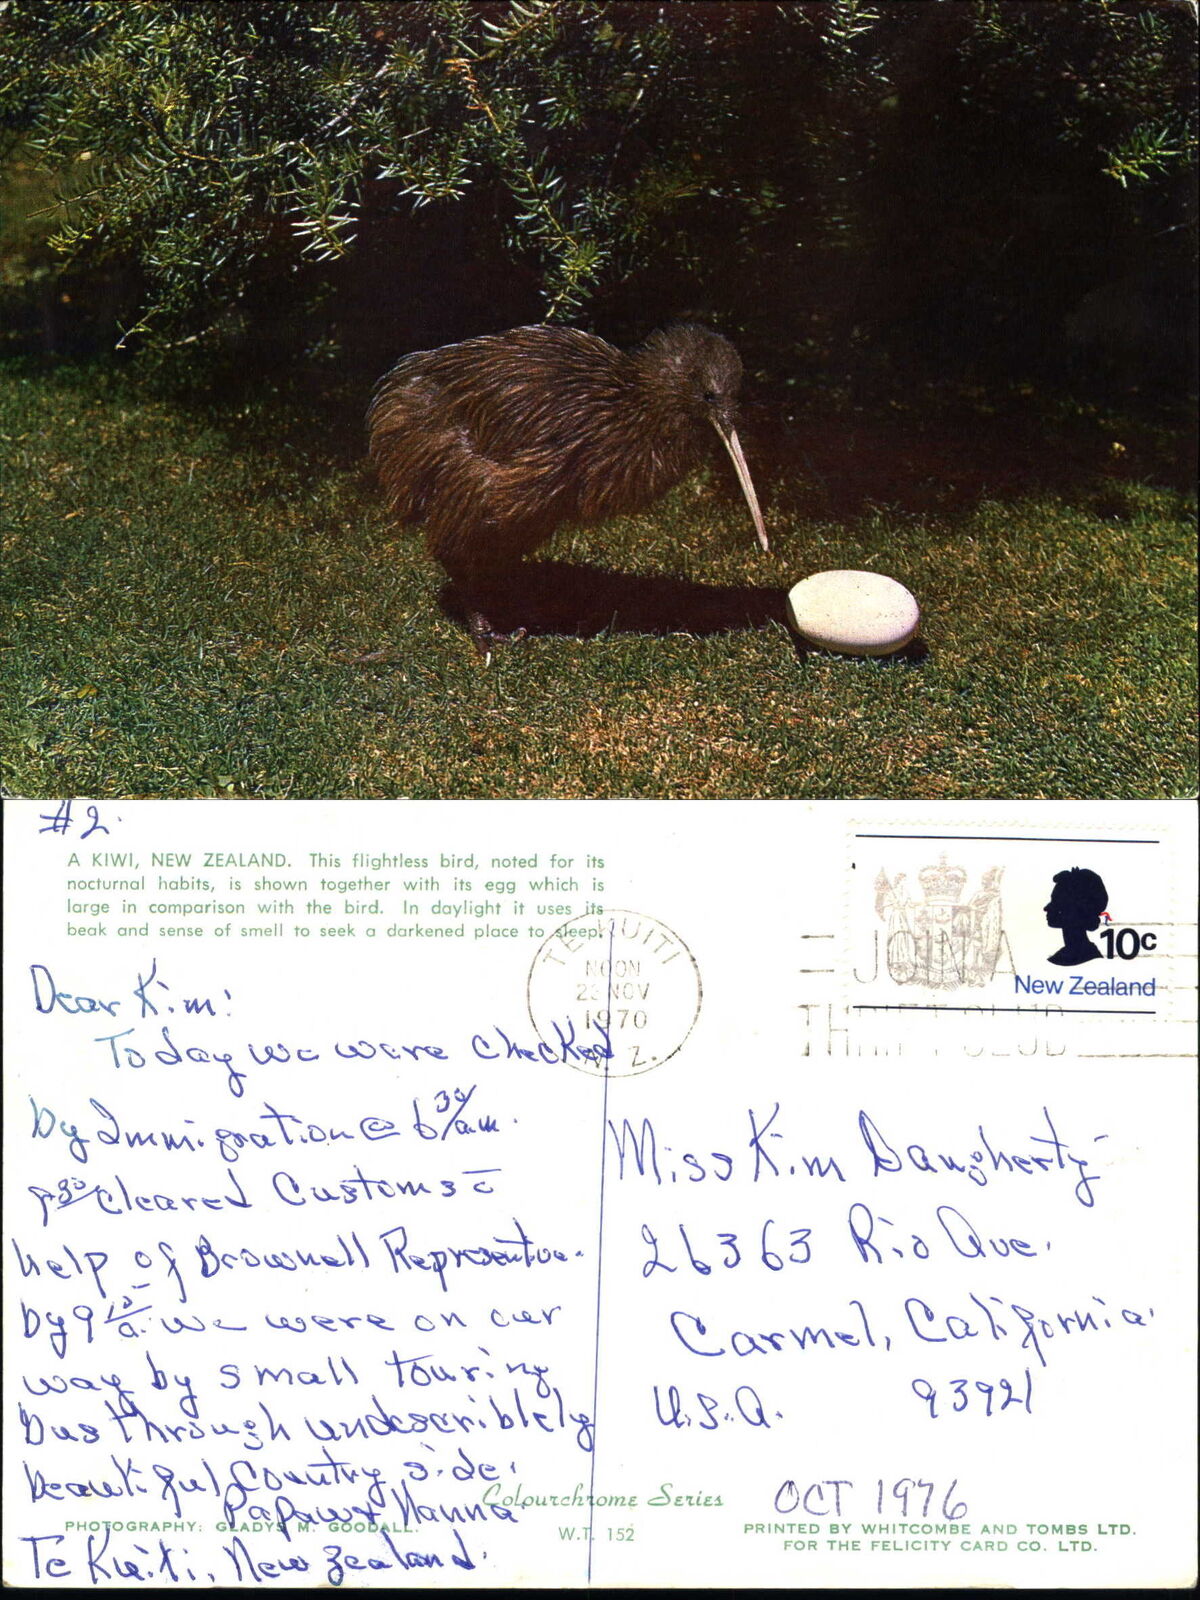 Kiwi flightless bird New Zealand mailed 1970 vintage postcard